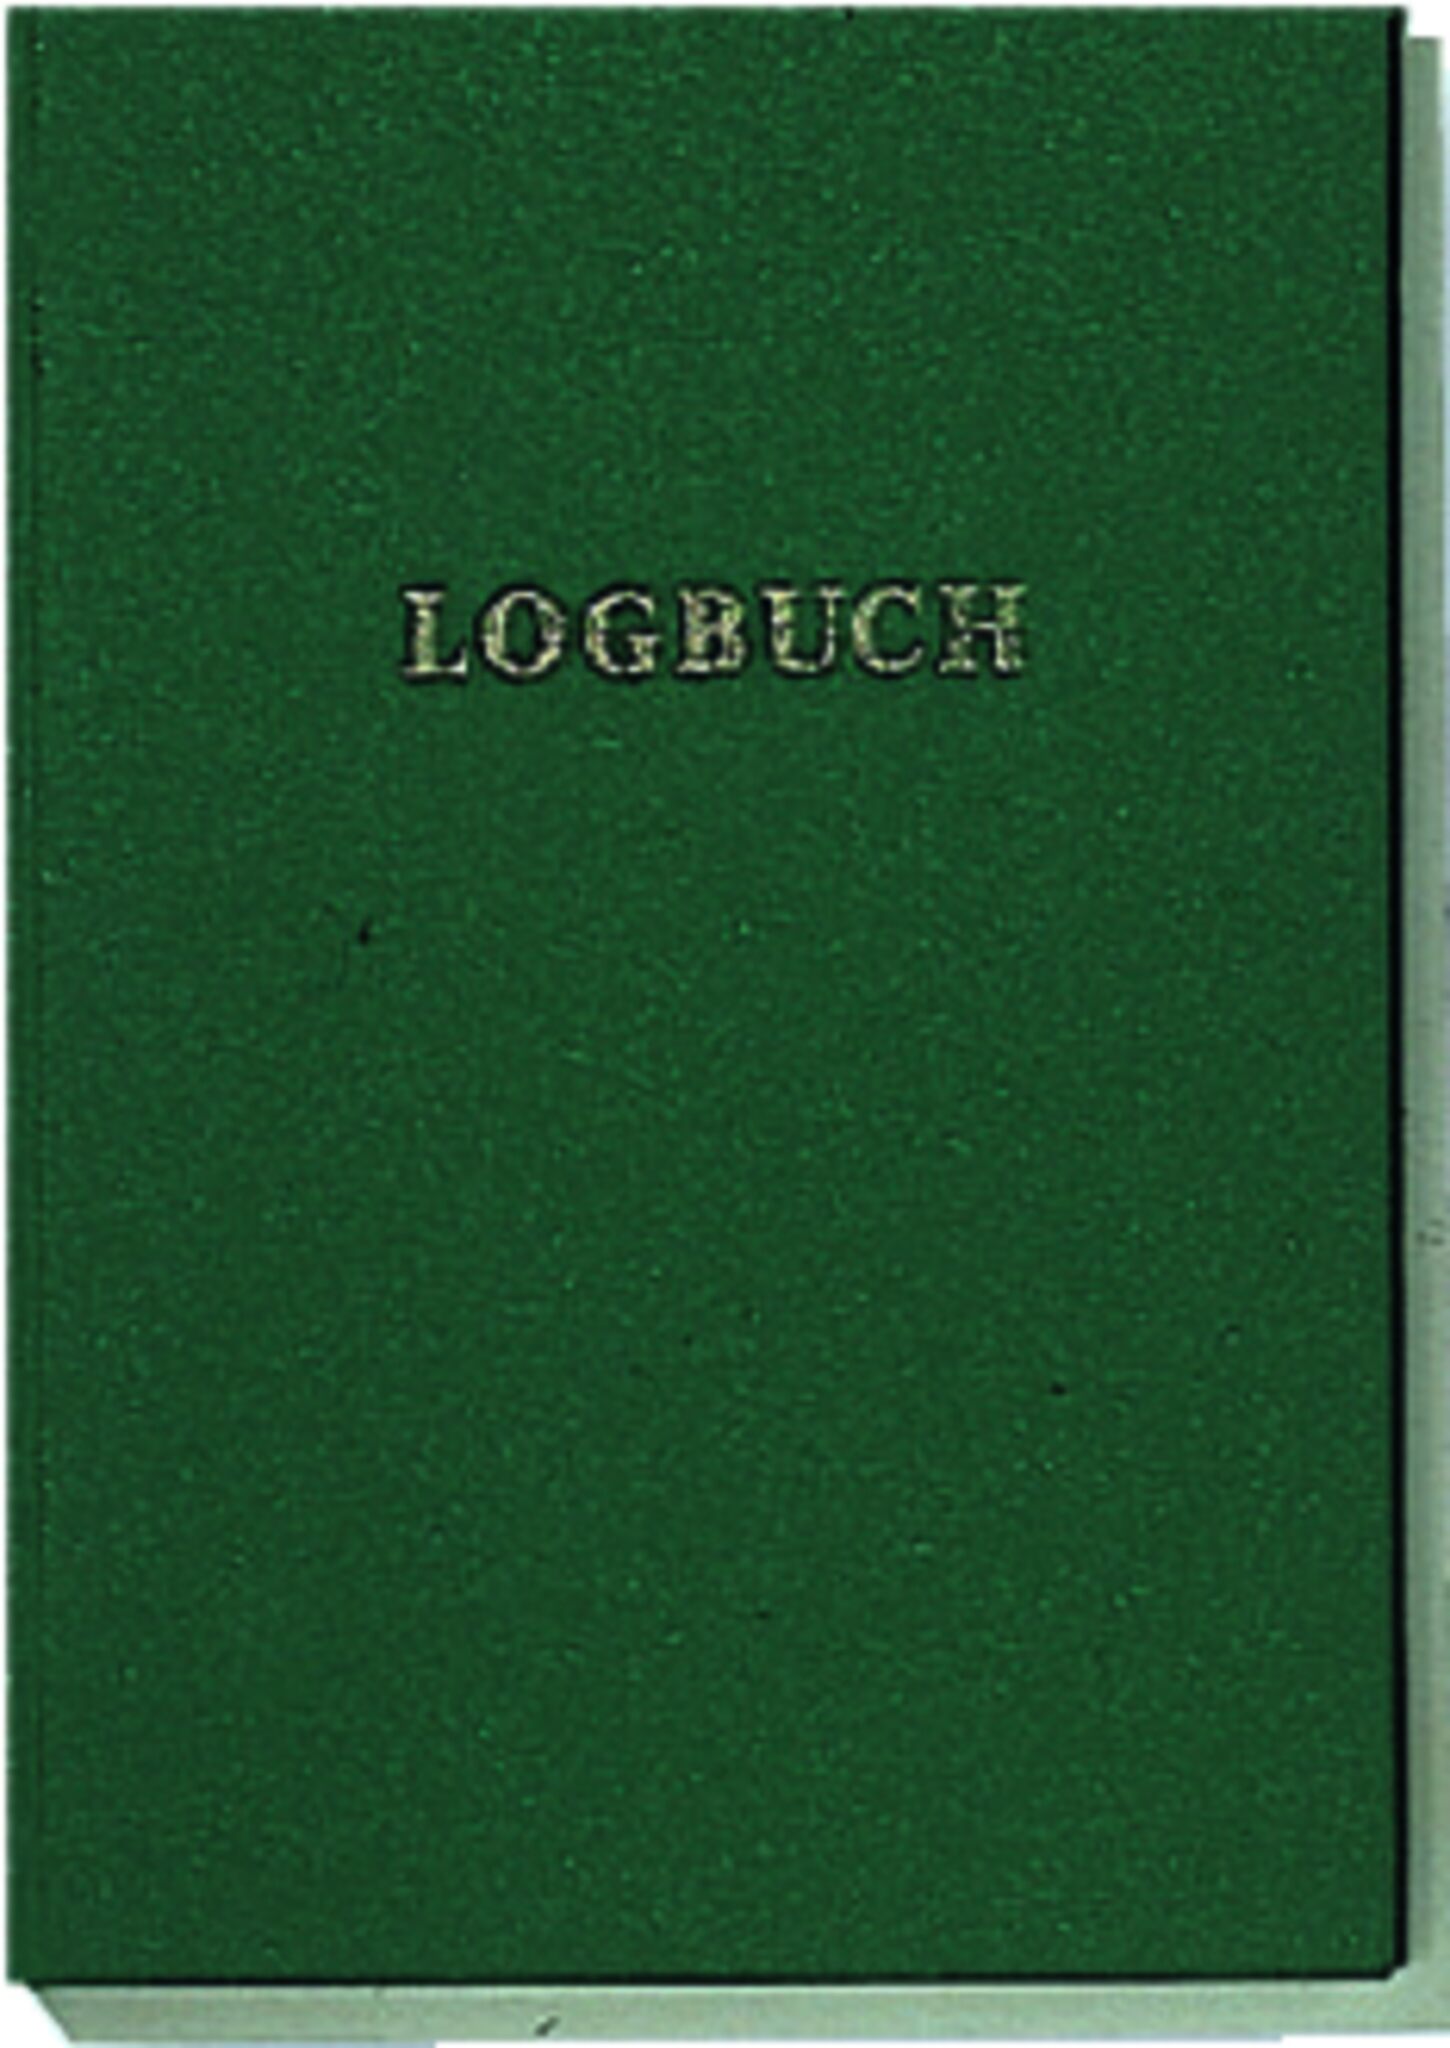 Grünes Logbuch